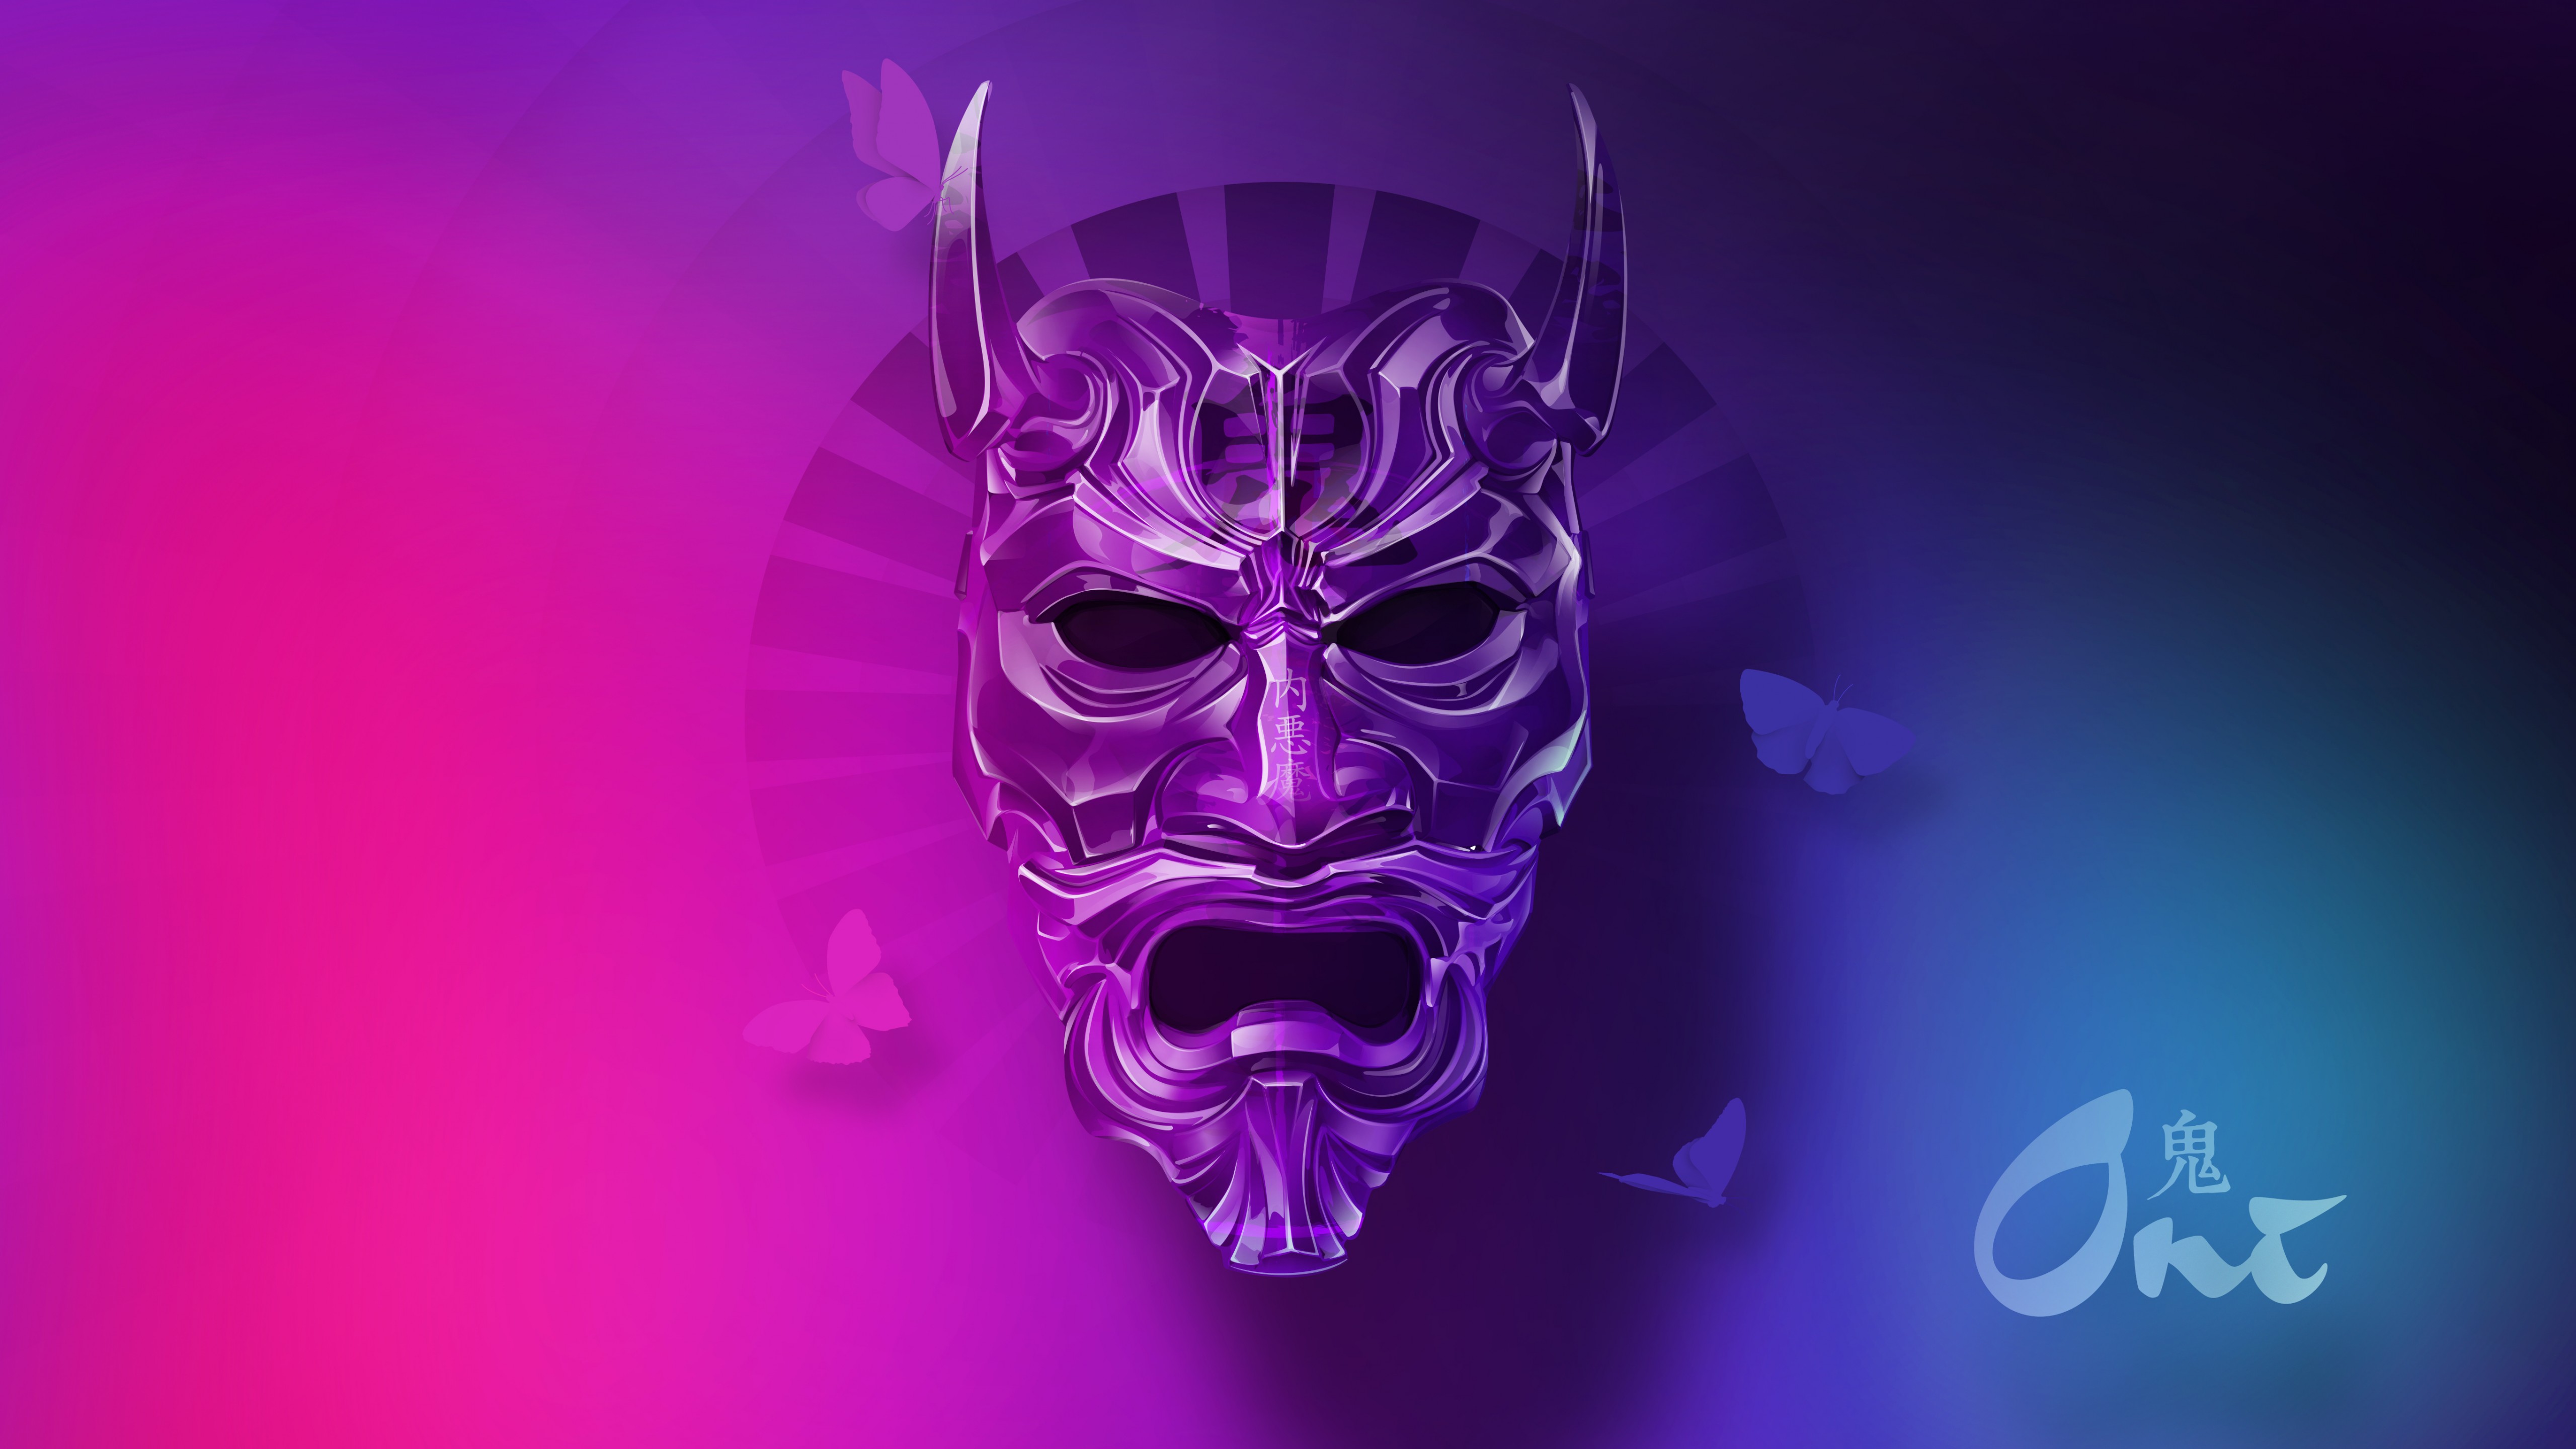 General 5120x2880 oni mask Japan mask fantasy art digital art gradient pink purple